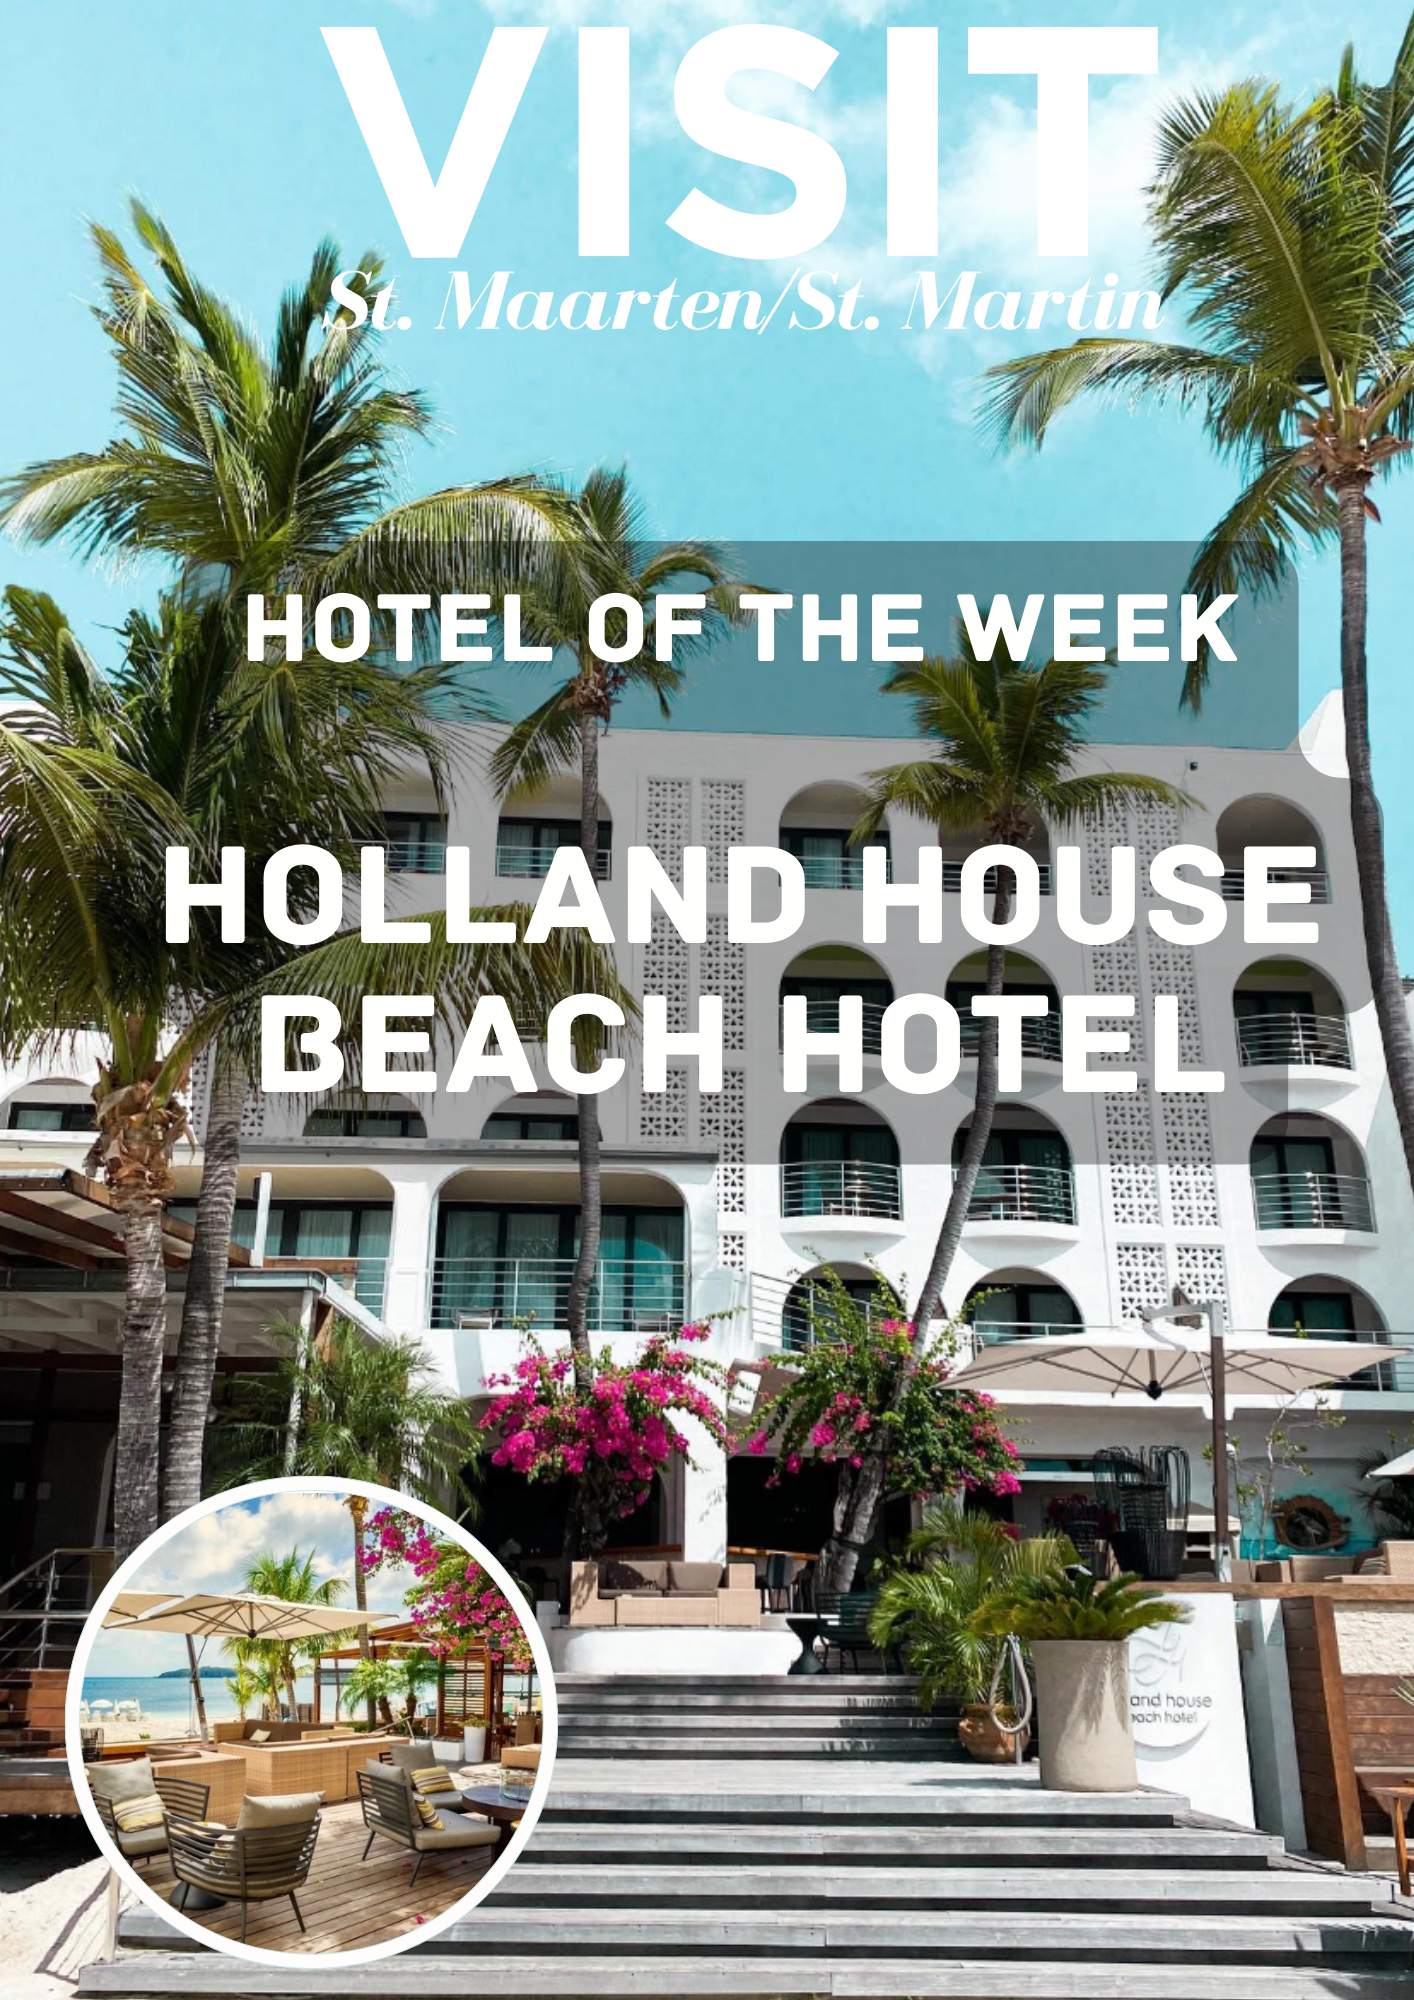 St Maarten Holland House Beach Hotel located on Front Street Philipsburg